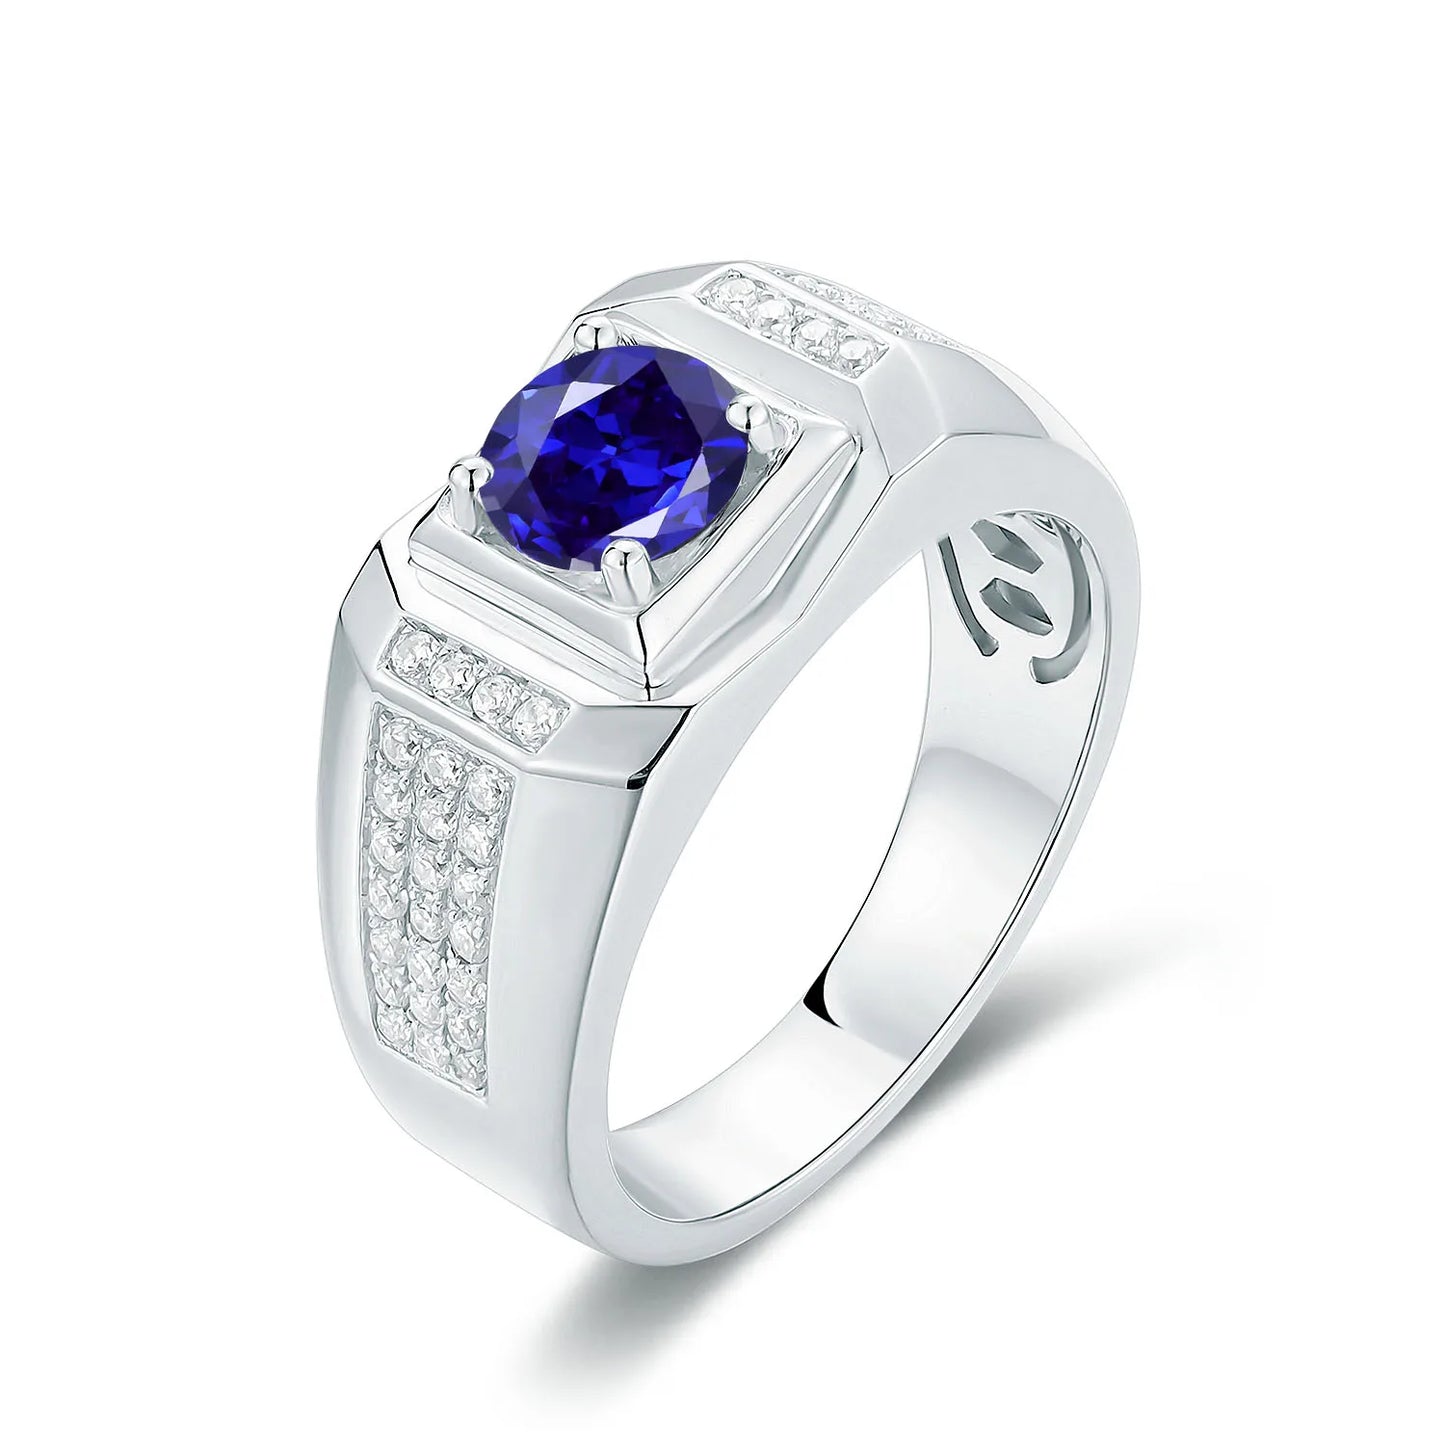 GEM'S BALLET 925 Sterling Silver Blue Sapphire Ring For Men Wedding 6.5mm 1.37Ct Round Lab Grown Sapphire Men's Statement Ring 925 Sterling Silver Lab Blue Sapphire